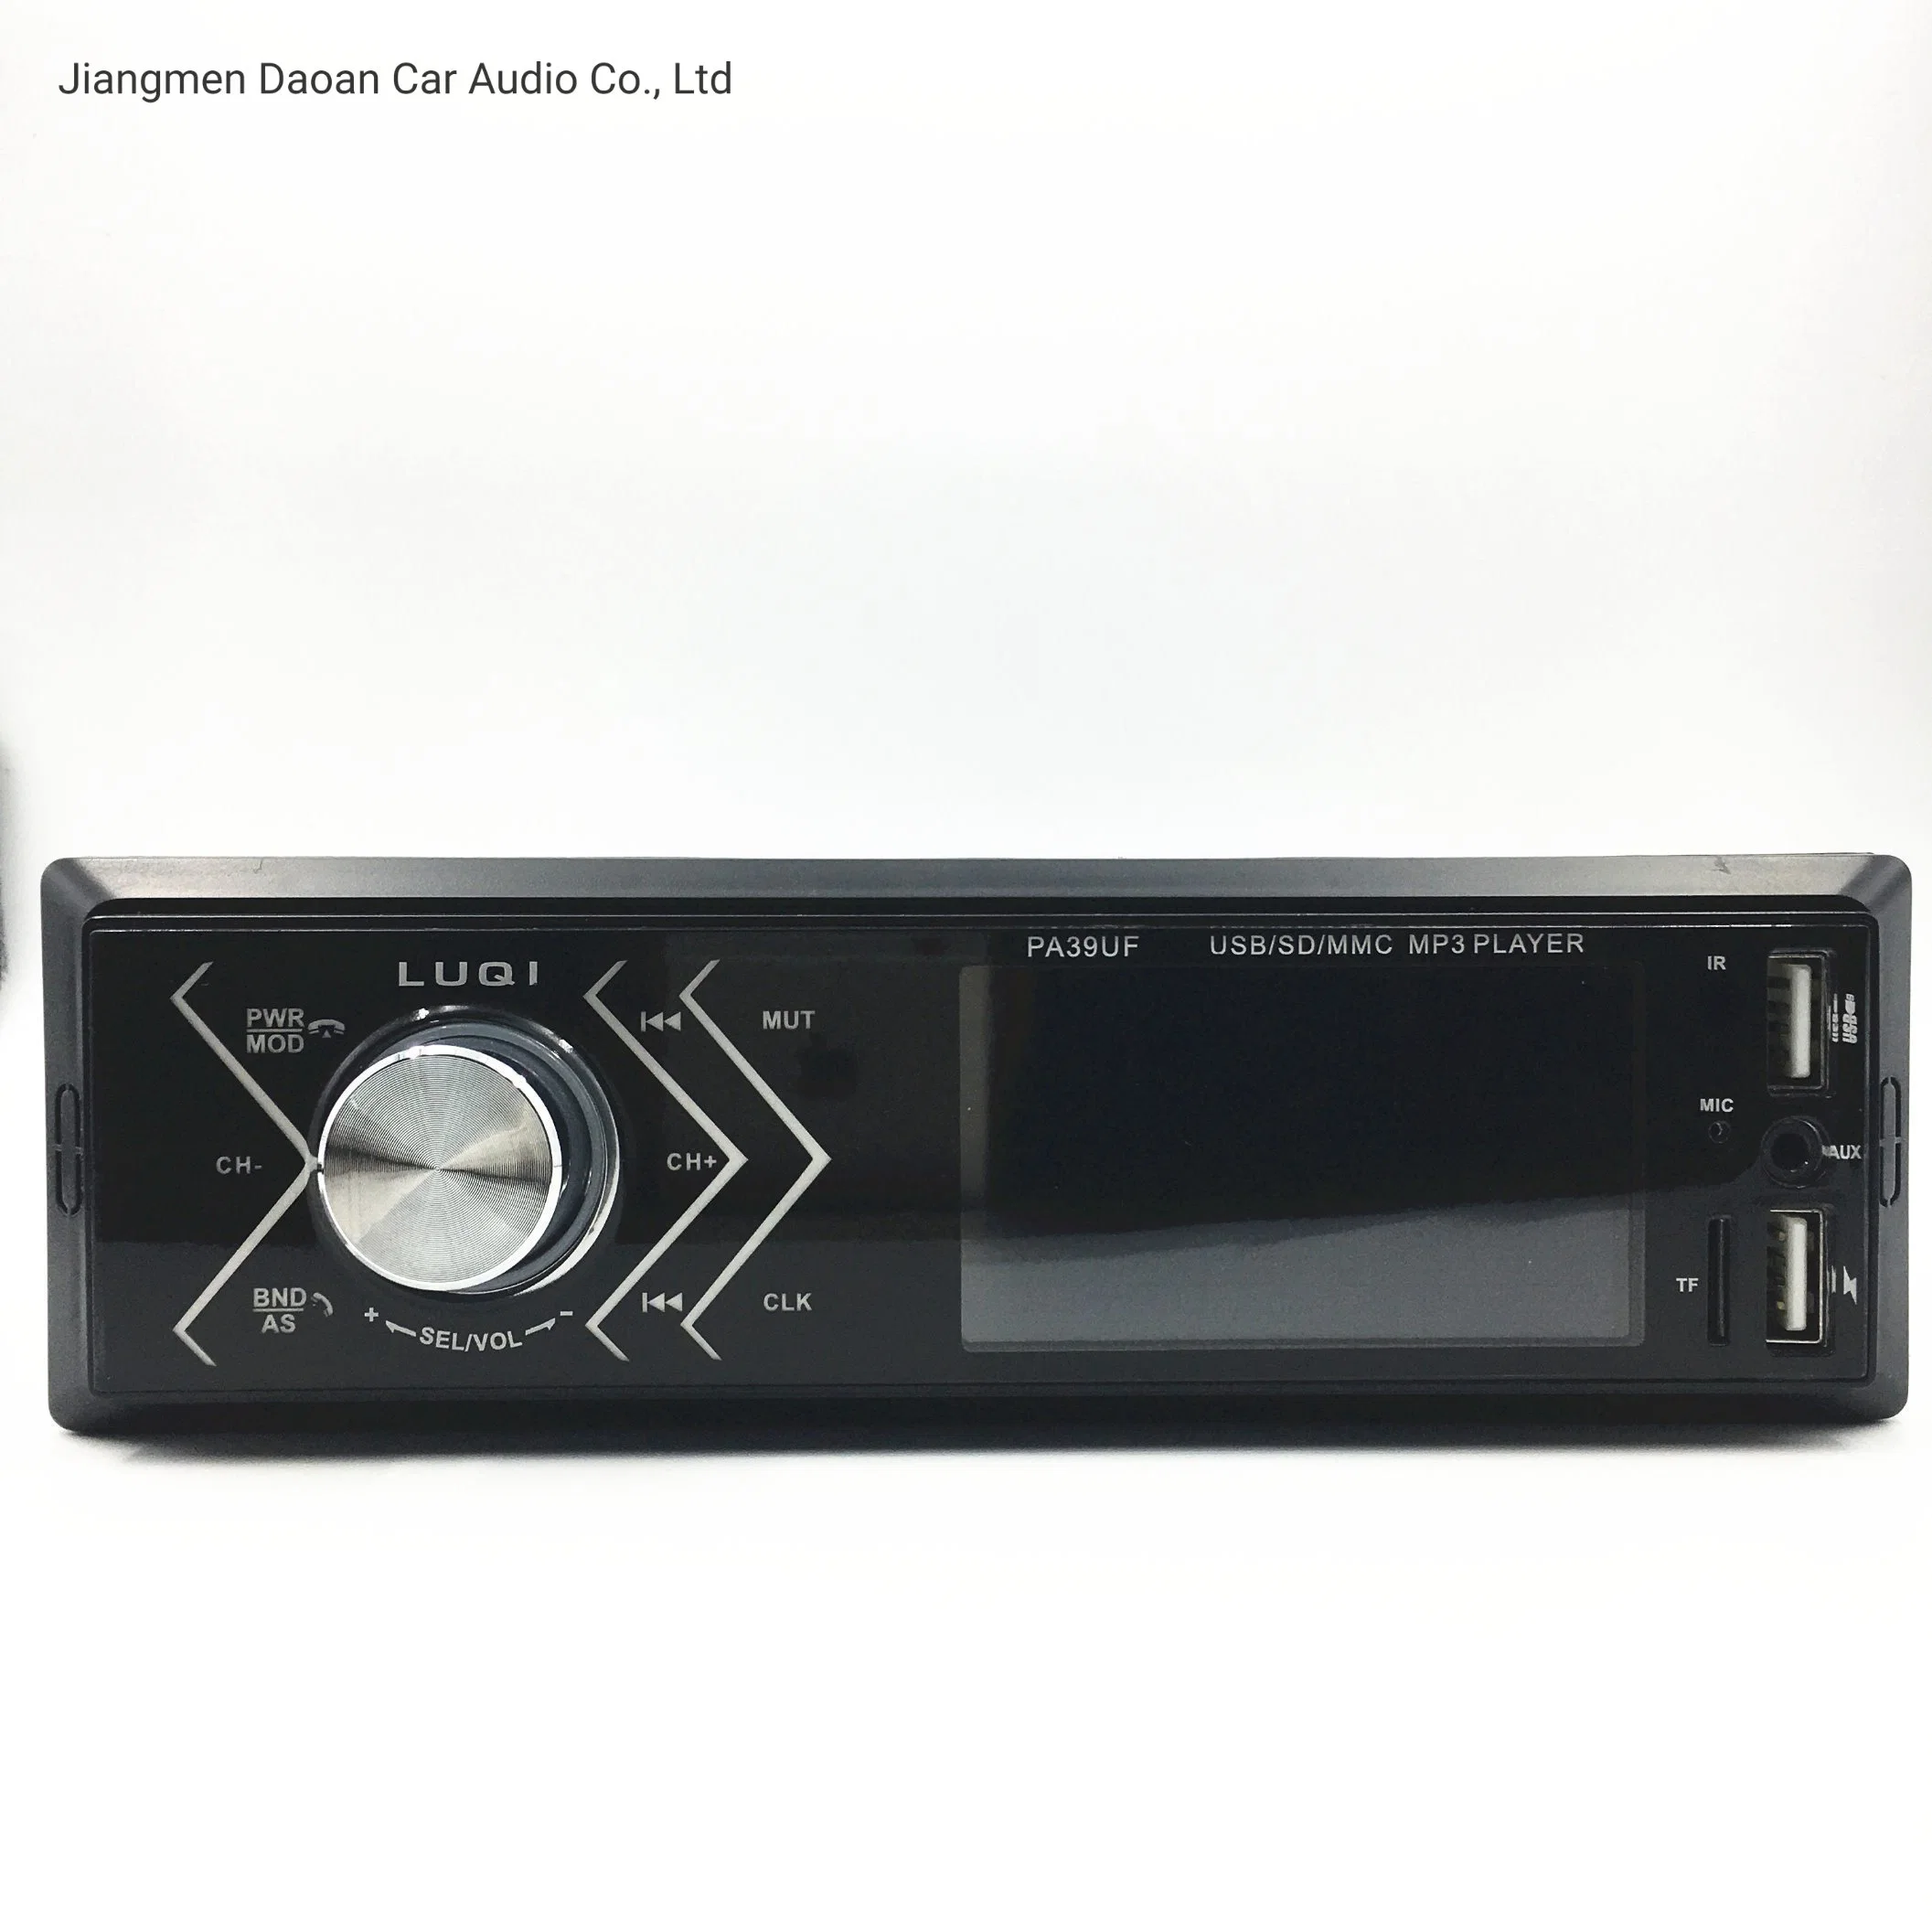 Großhandel/Lieferantspreis Consumer Electronics Auto MP3 zwei USB Audio-Player